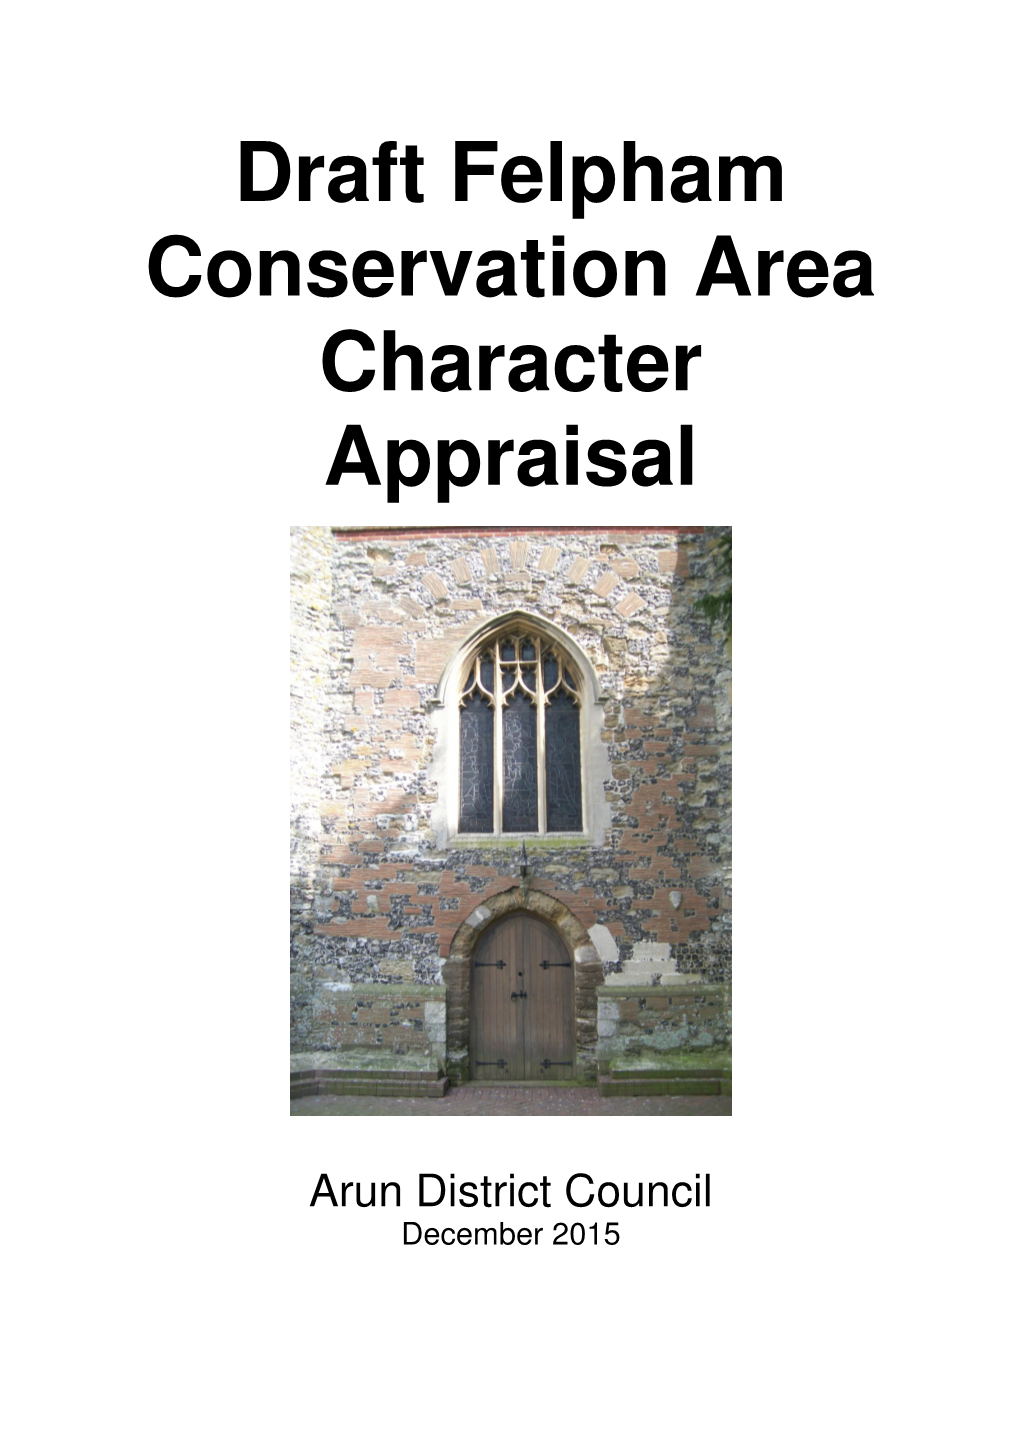 Draft Felpham Conservation Area Character Appraisal